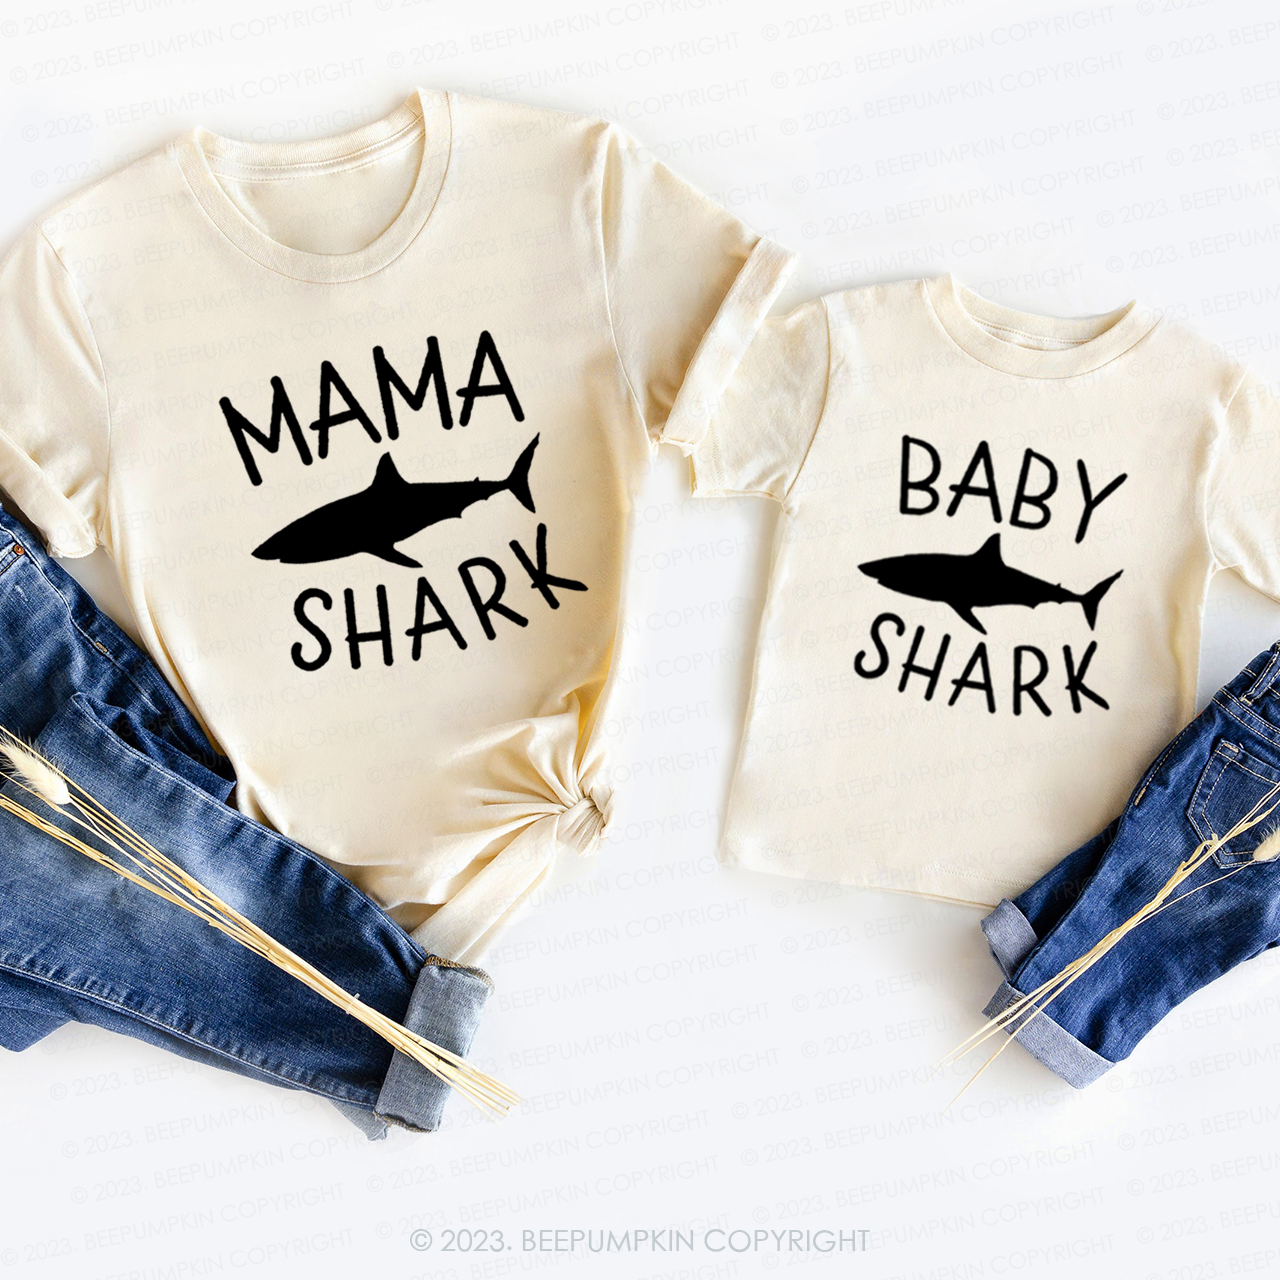 Mama Shark Baby Shark T-Shirts For Mom&Me